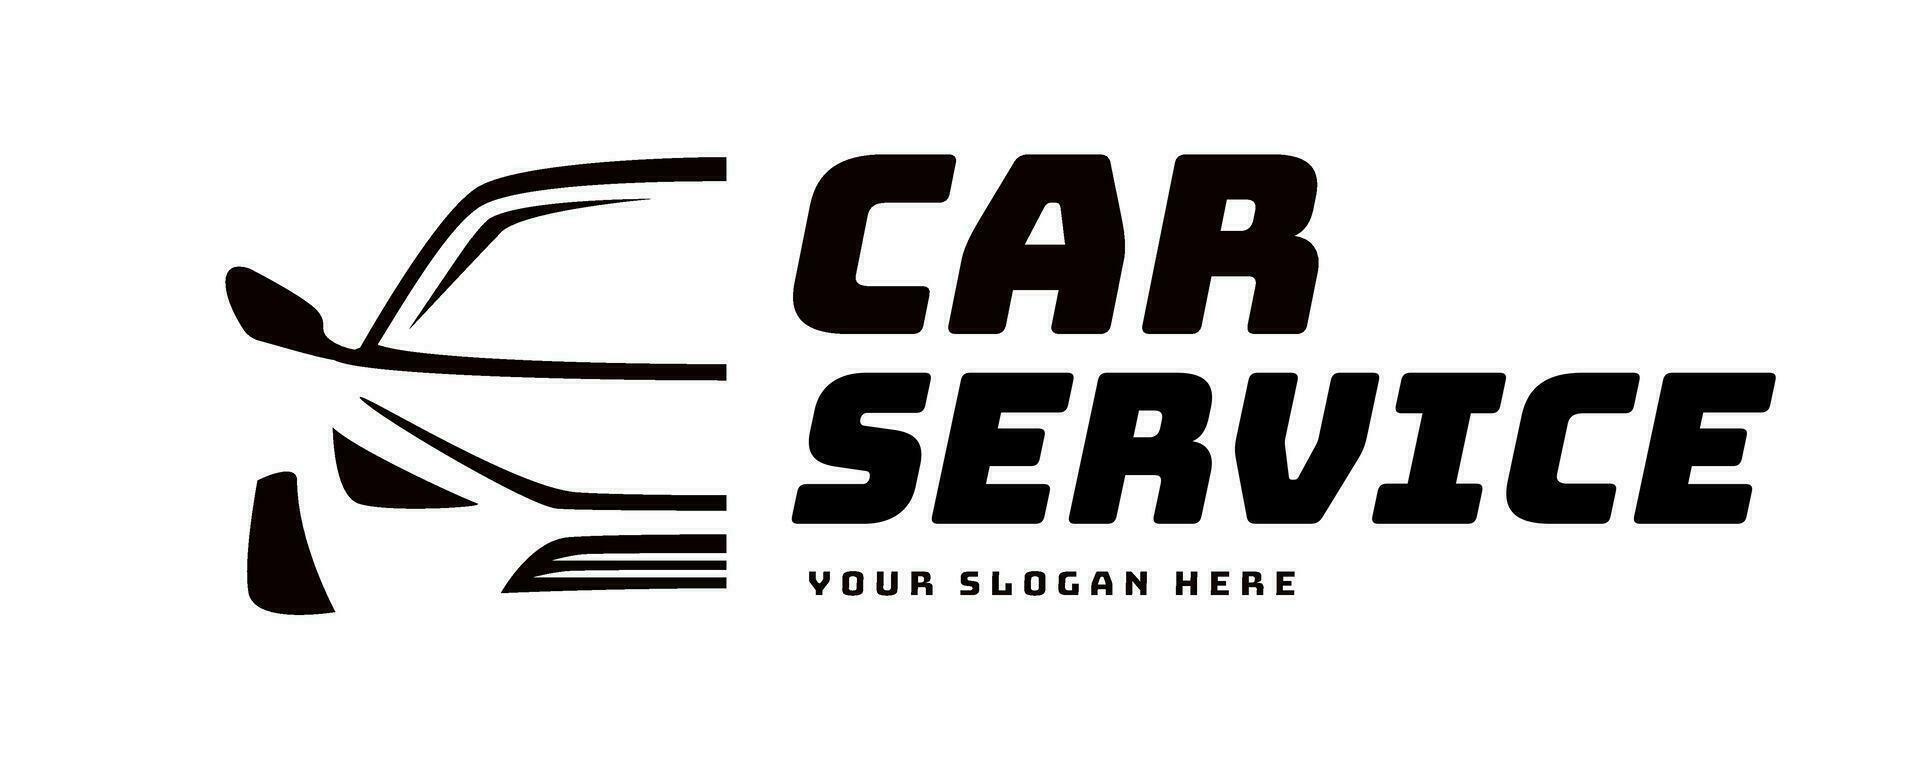 Car service vector logo black color